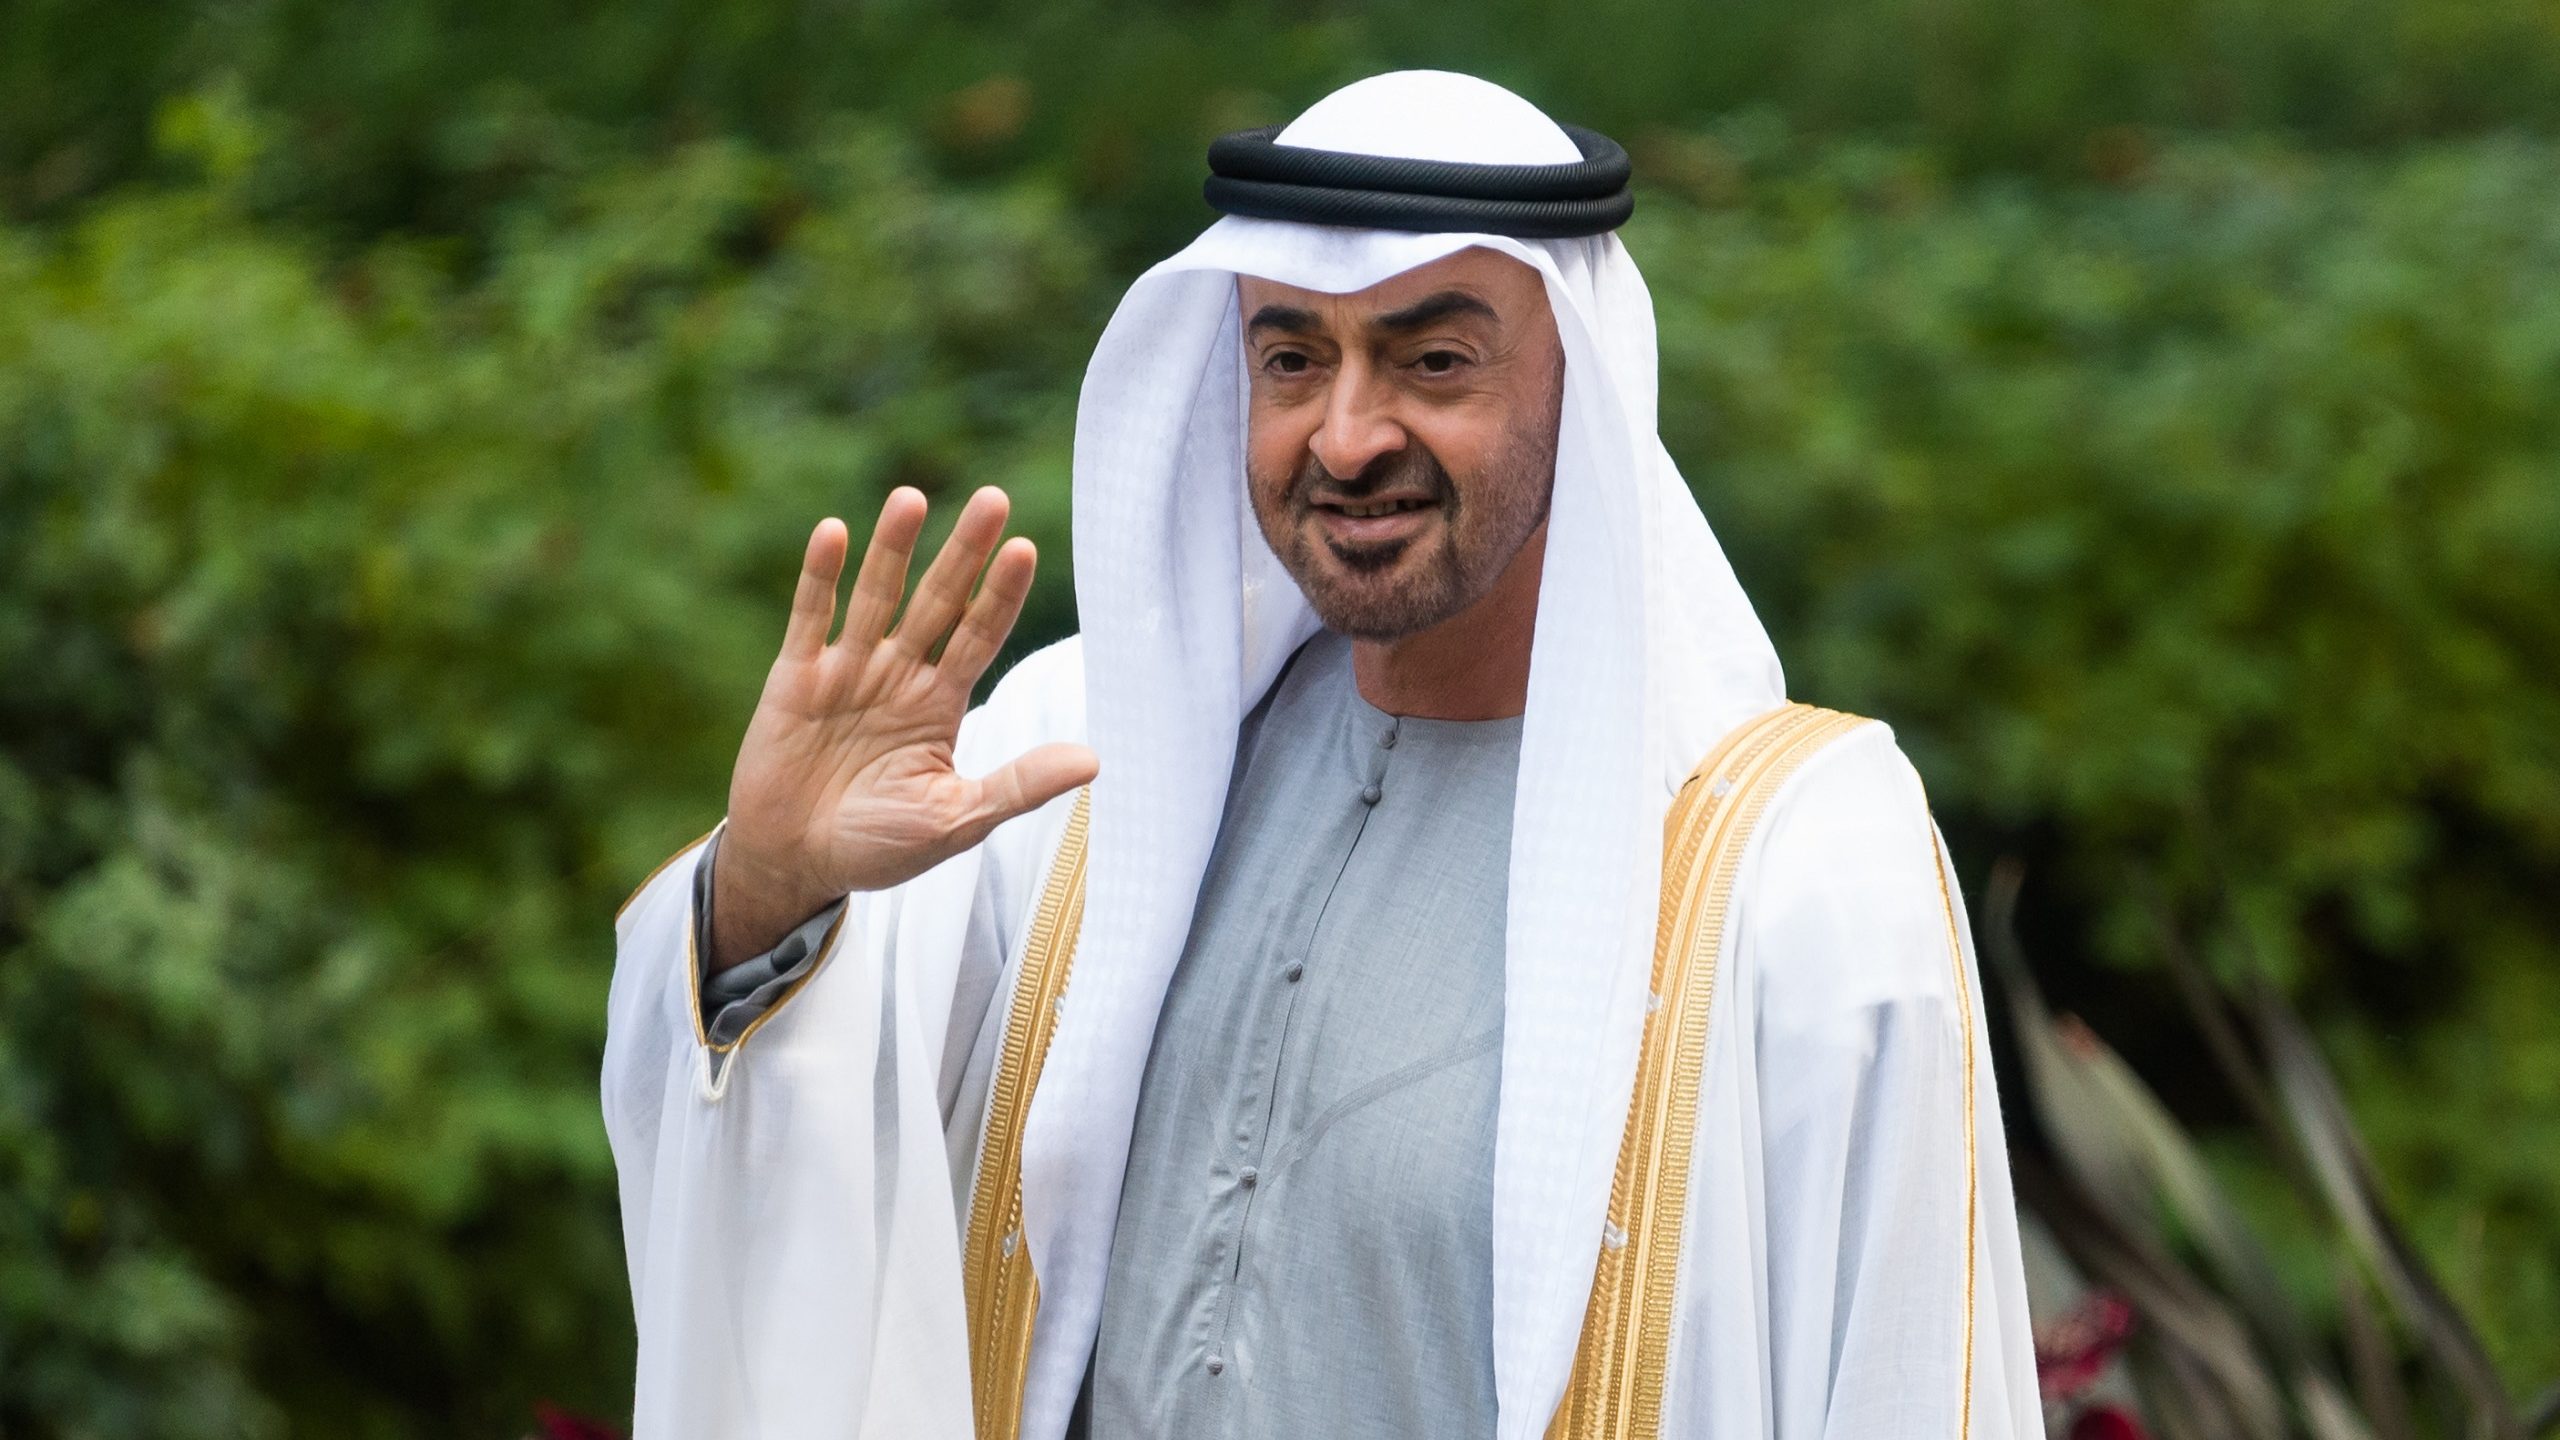 Who Is UAE’s New President Mohamed bin Zayed?